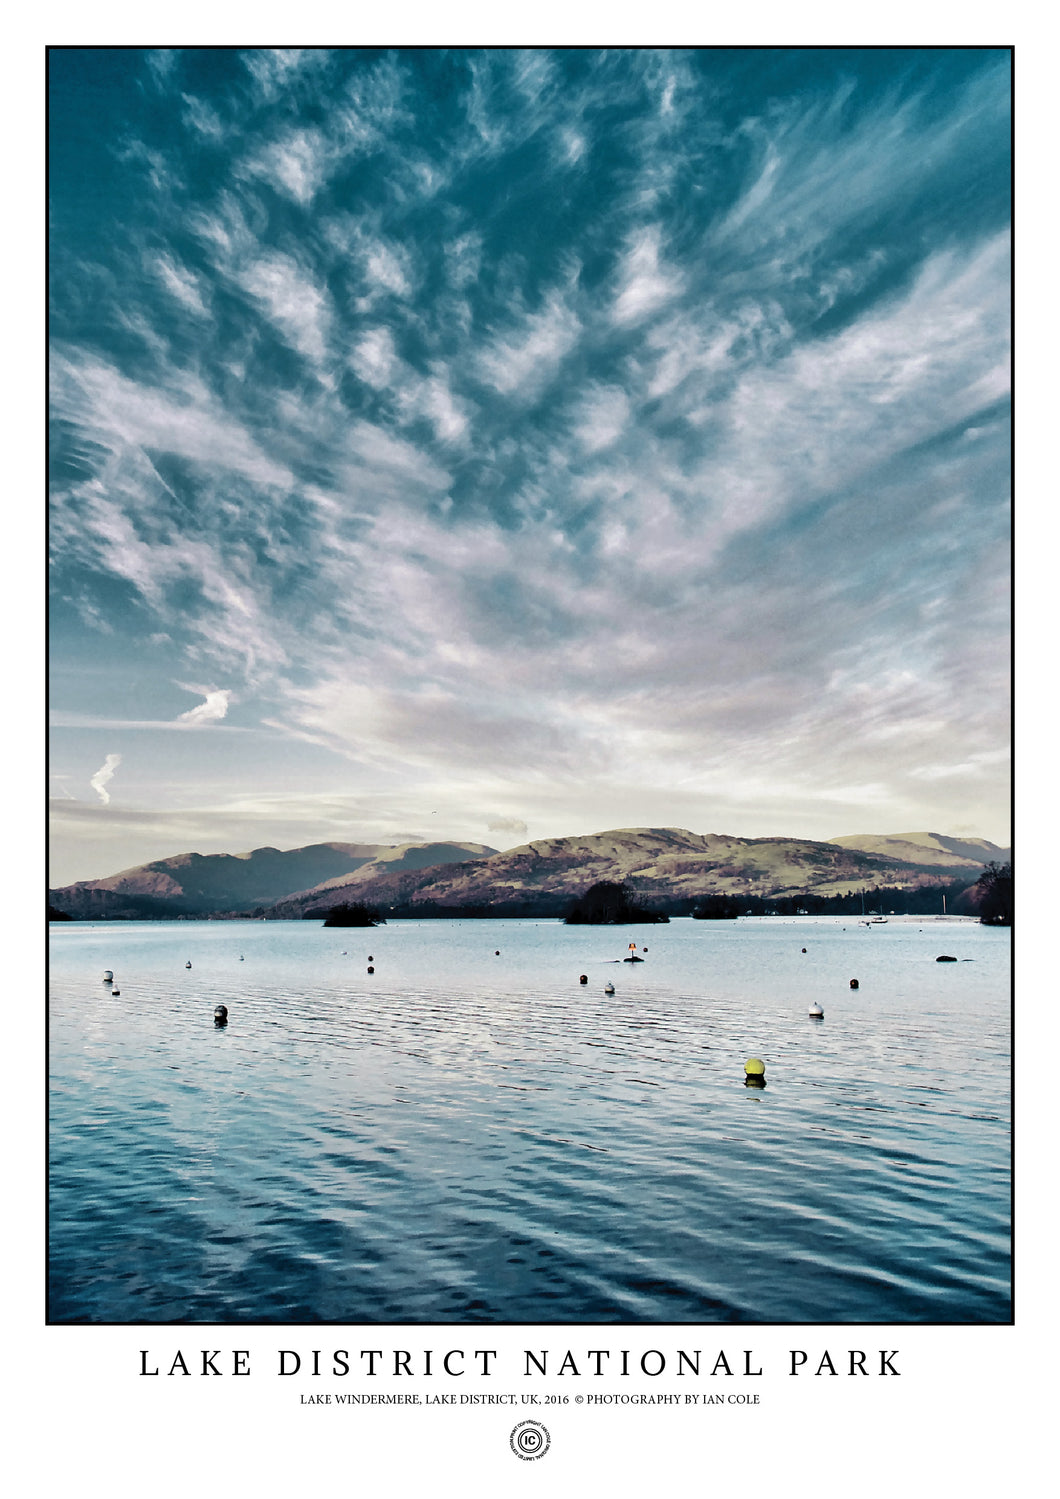 Lake Windermere, Lake District National Park